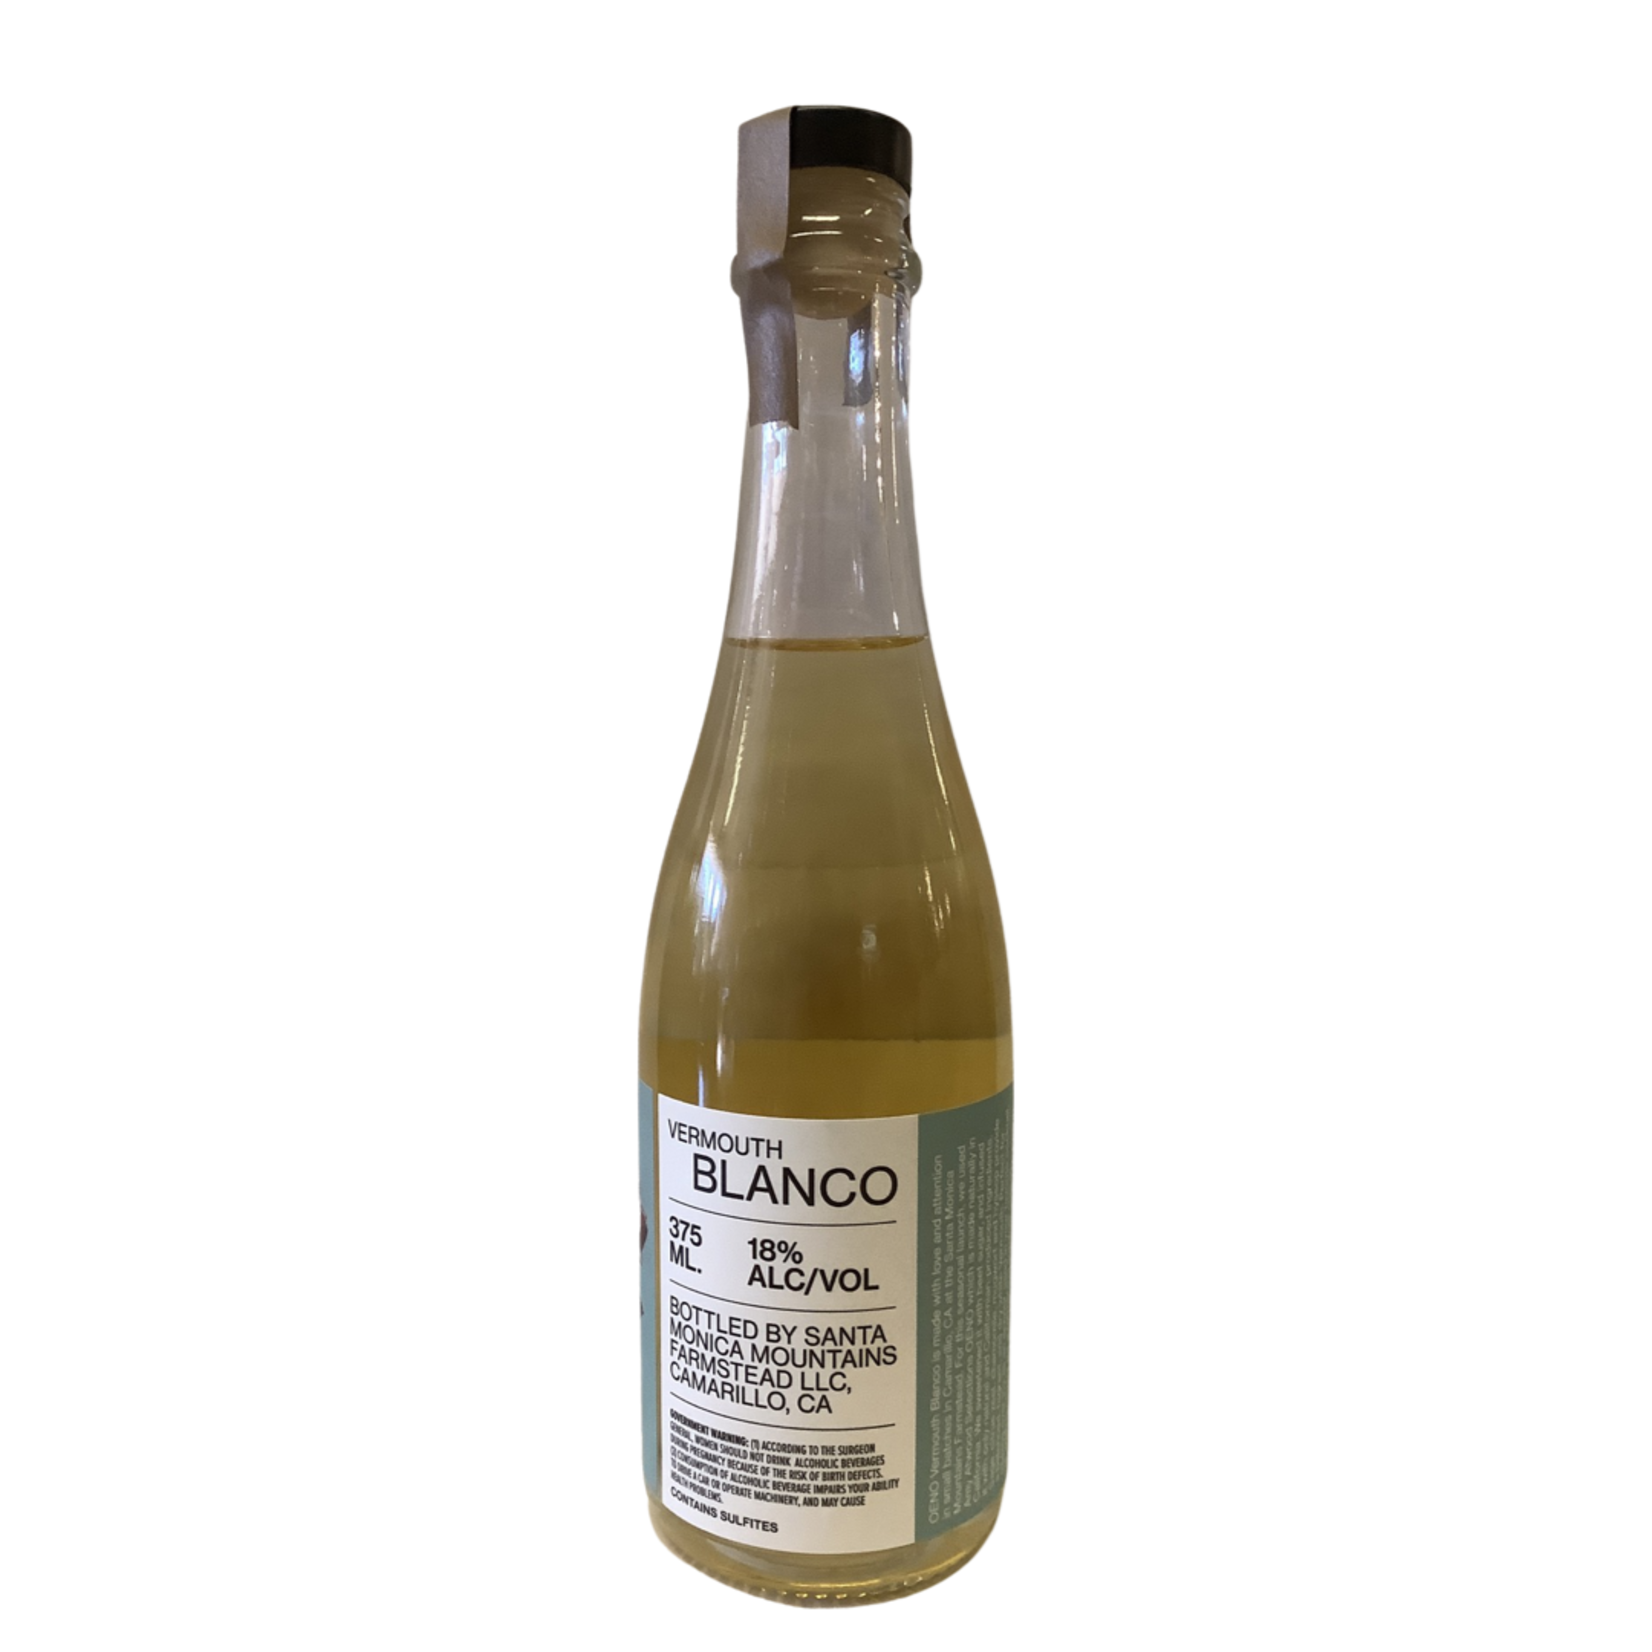 OENO Vermouth Blanco (375 ml), California